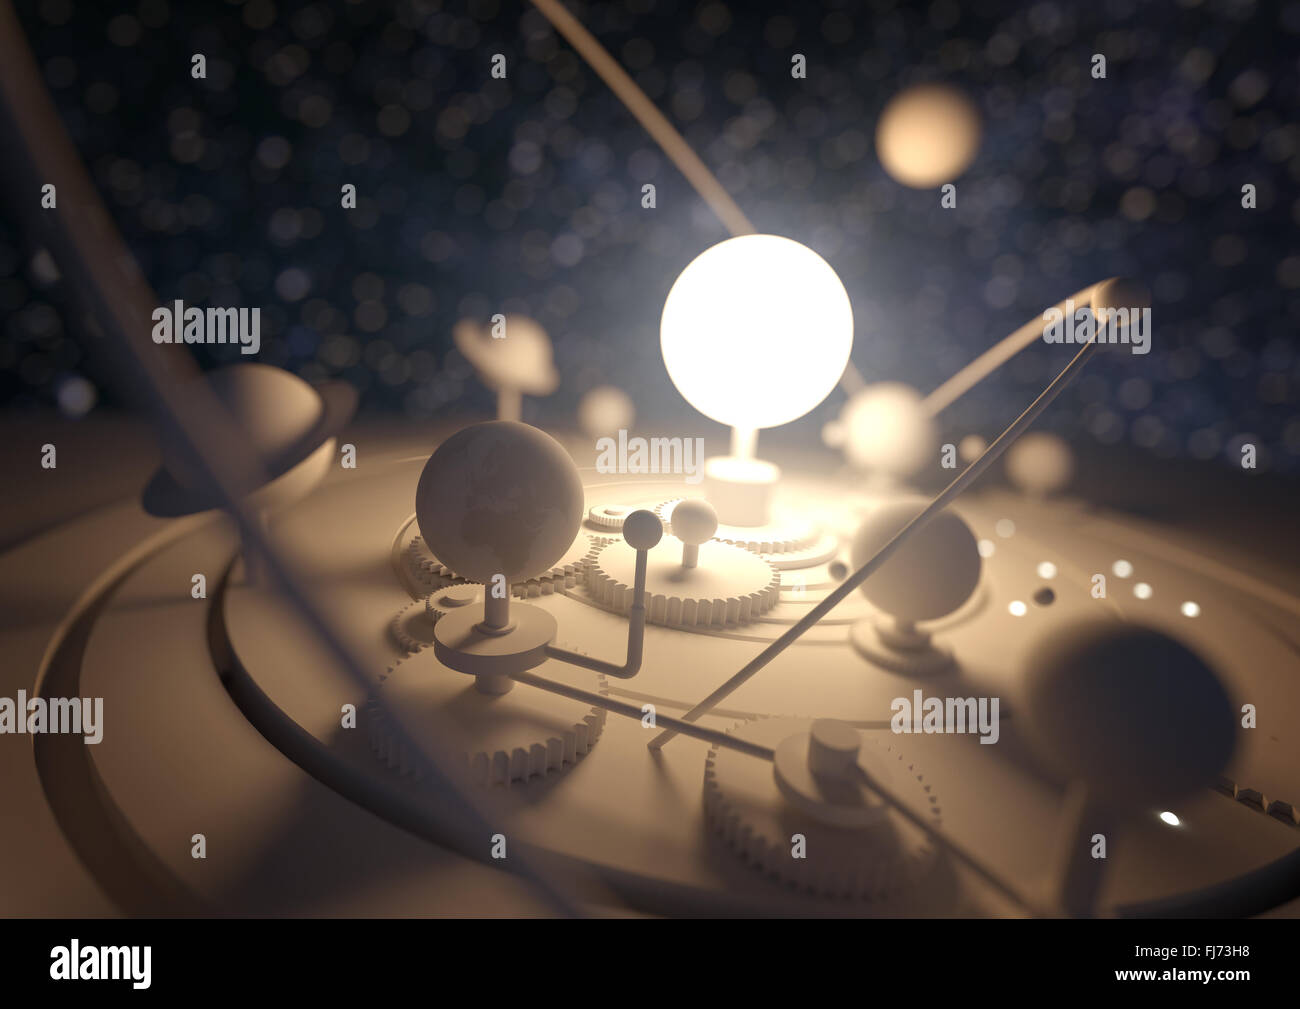 Planetarium Model. Planets and comets orbiting around the sun. Illustration. Stock Photo